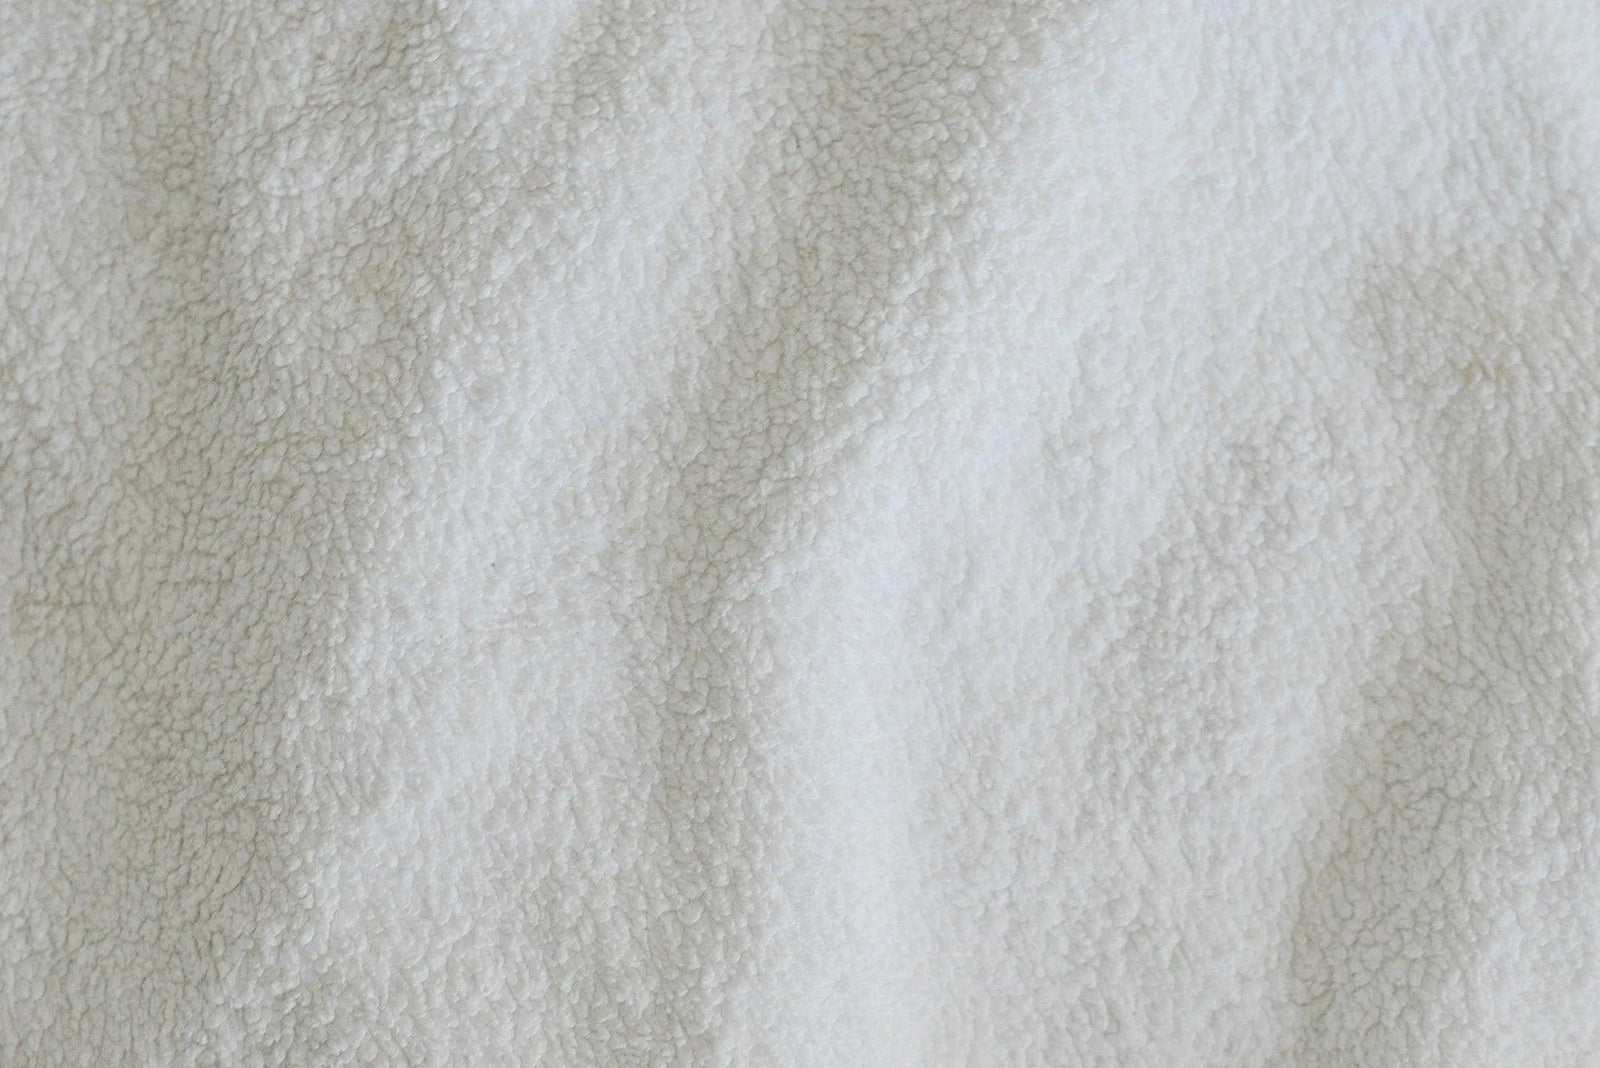 7 Benefits Of Quick Dry Microfiber Towel